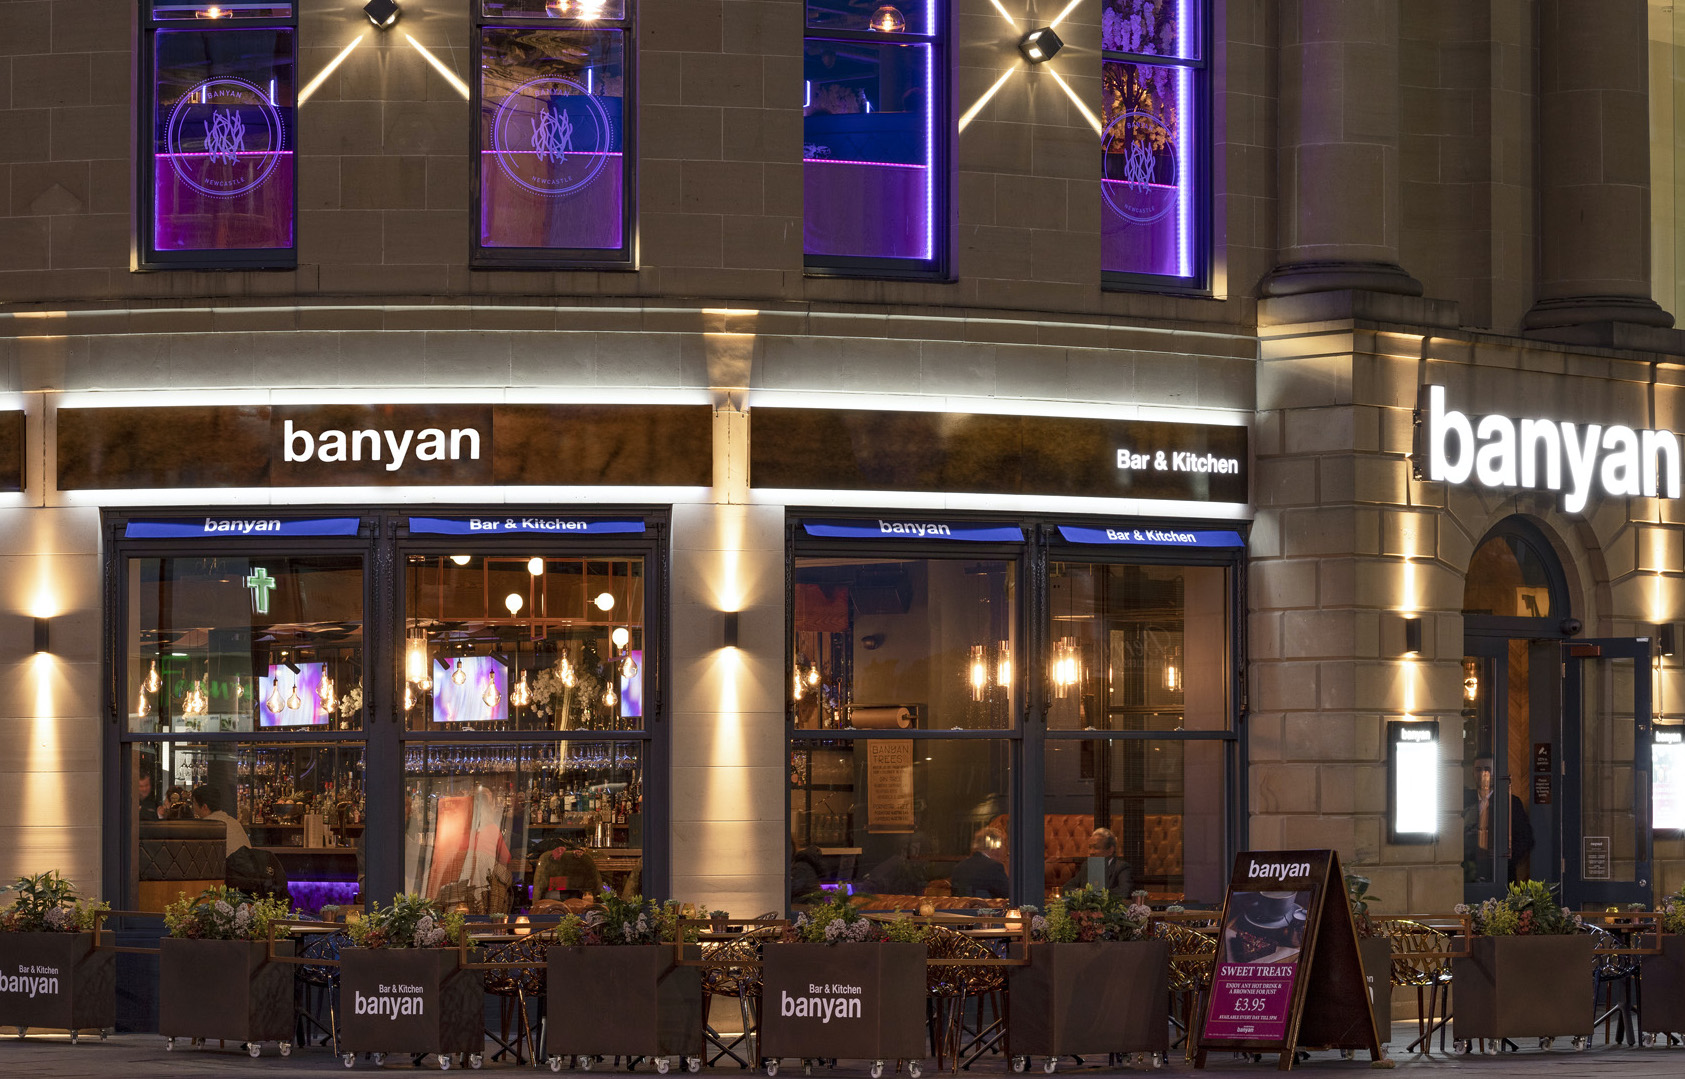 Banyan - Monument Mall on Tuesday 21st November